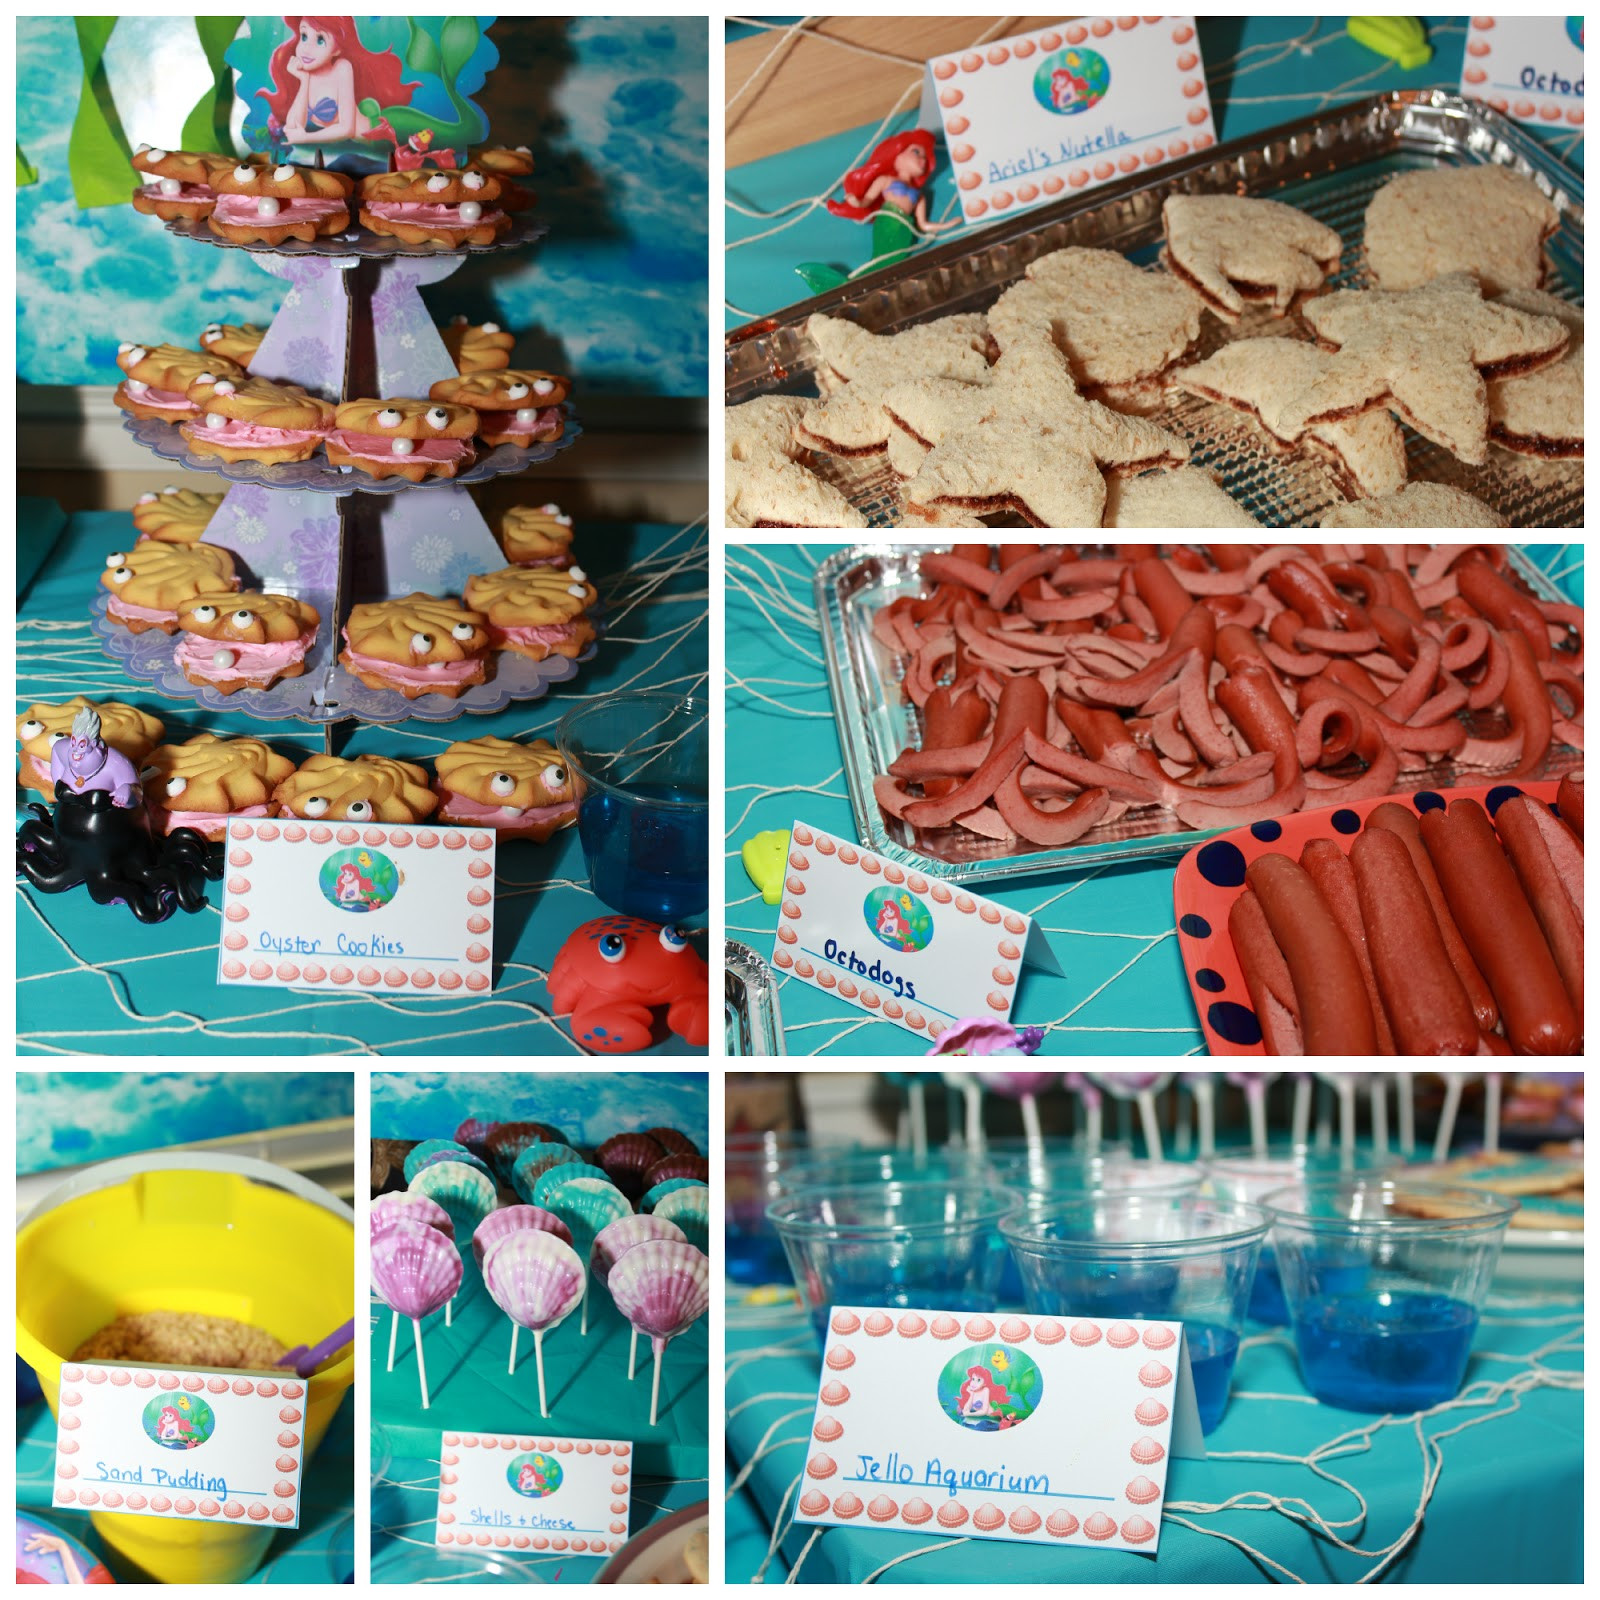 The Little Mermaid Party Food Ideas
 Melissa s Party Ideas The Little Mermaid Party Ideas